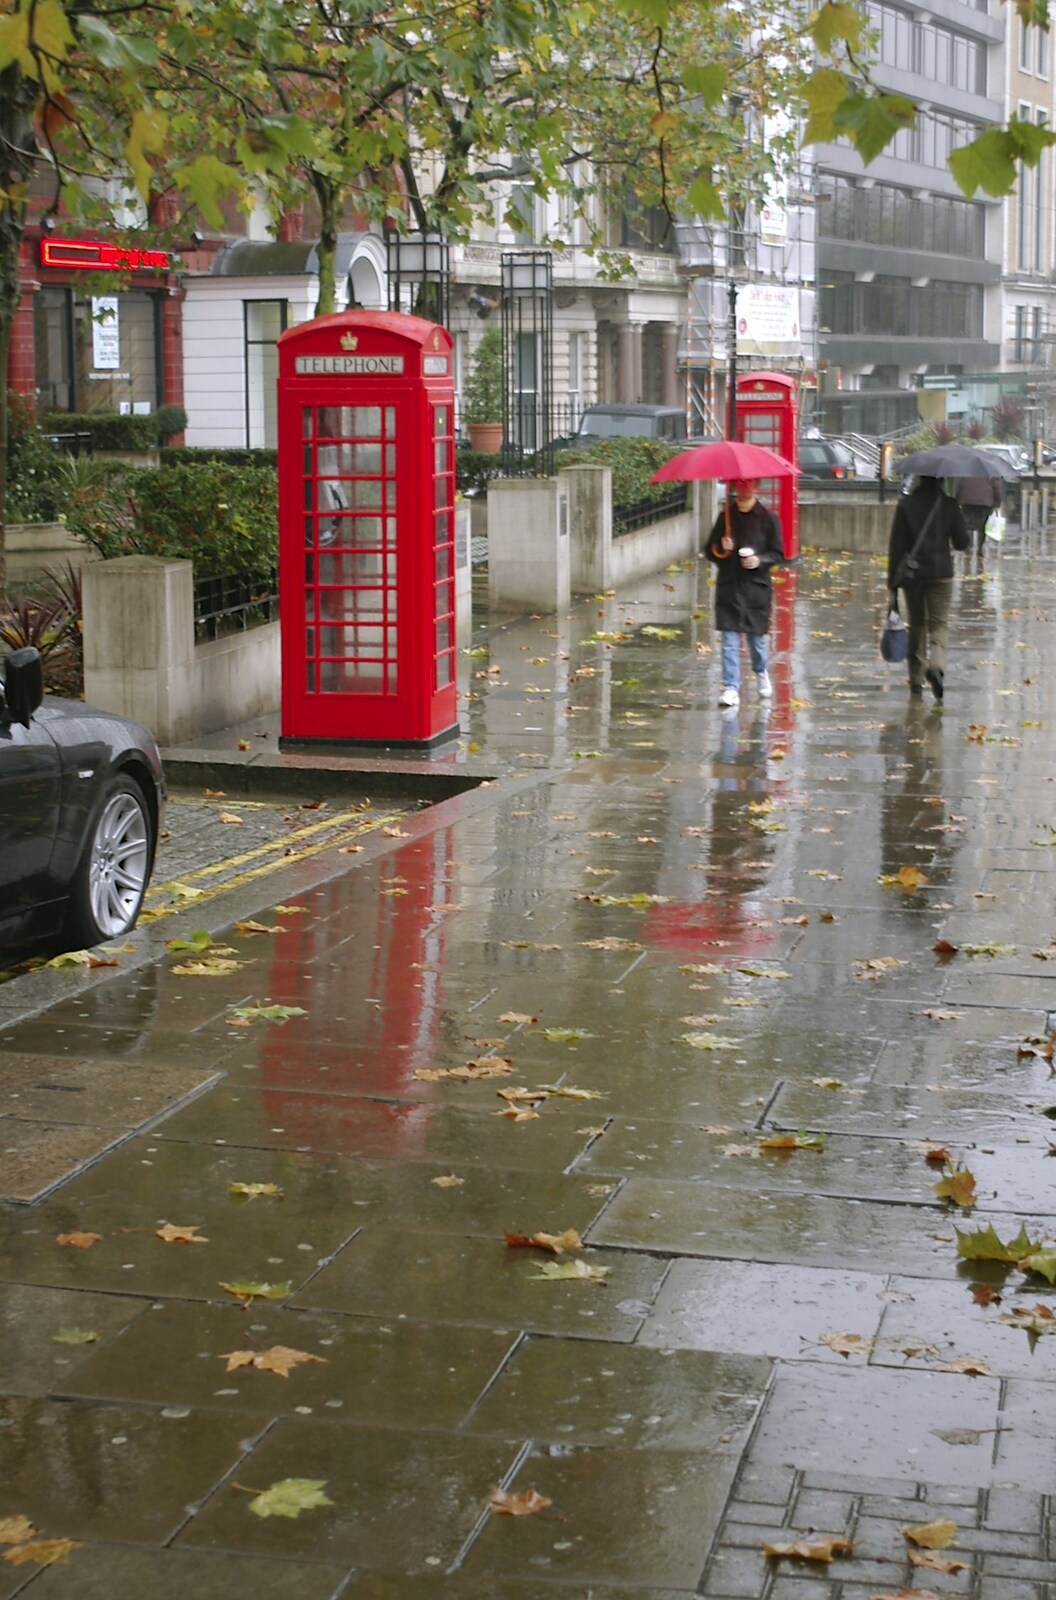 K6 phone boxes on Kensington High Street from London in the Rain - 18th November 2004